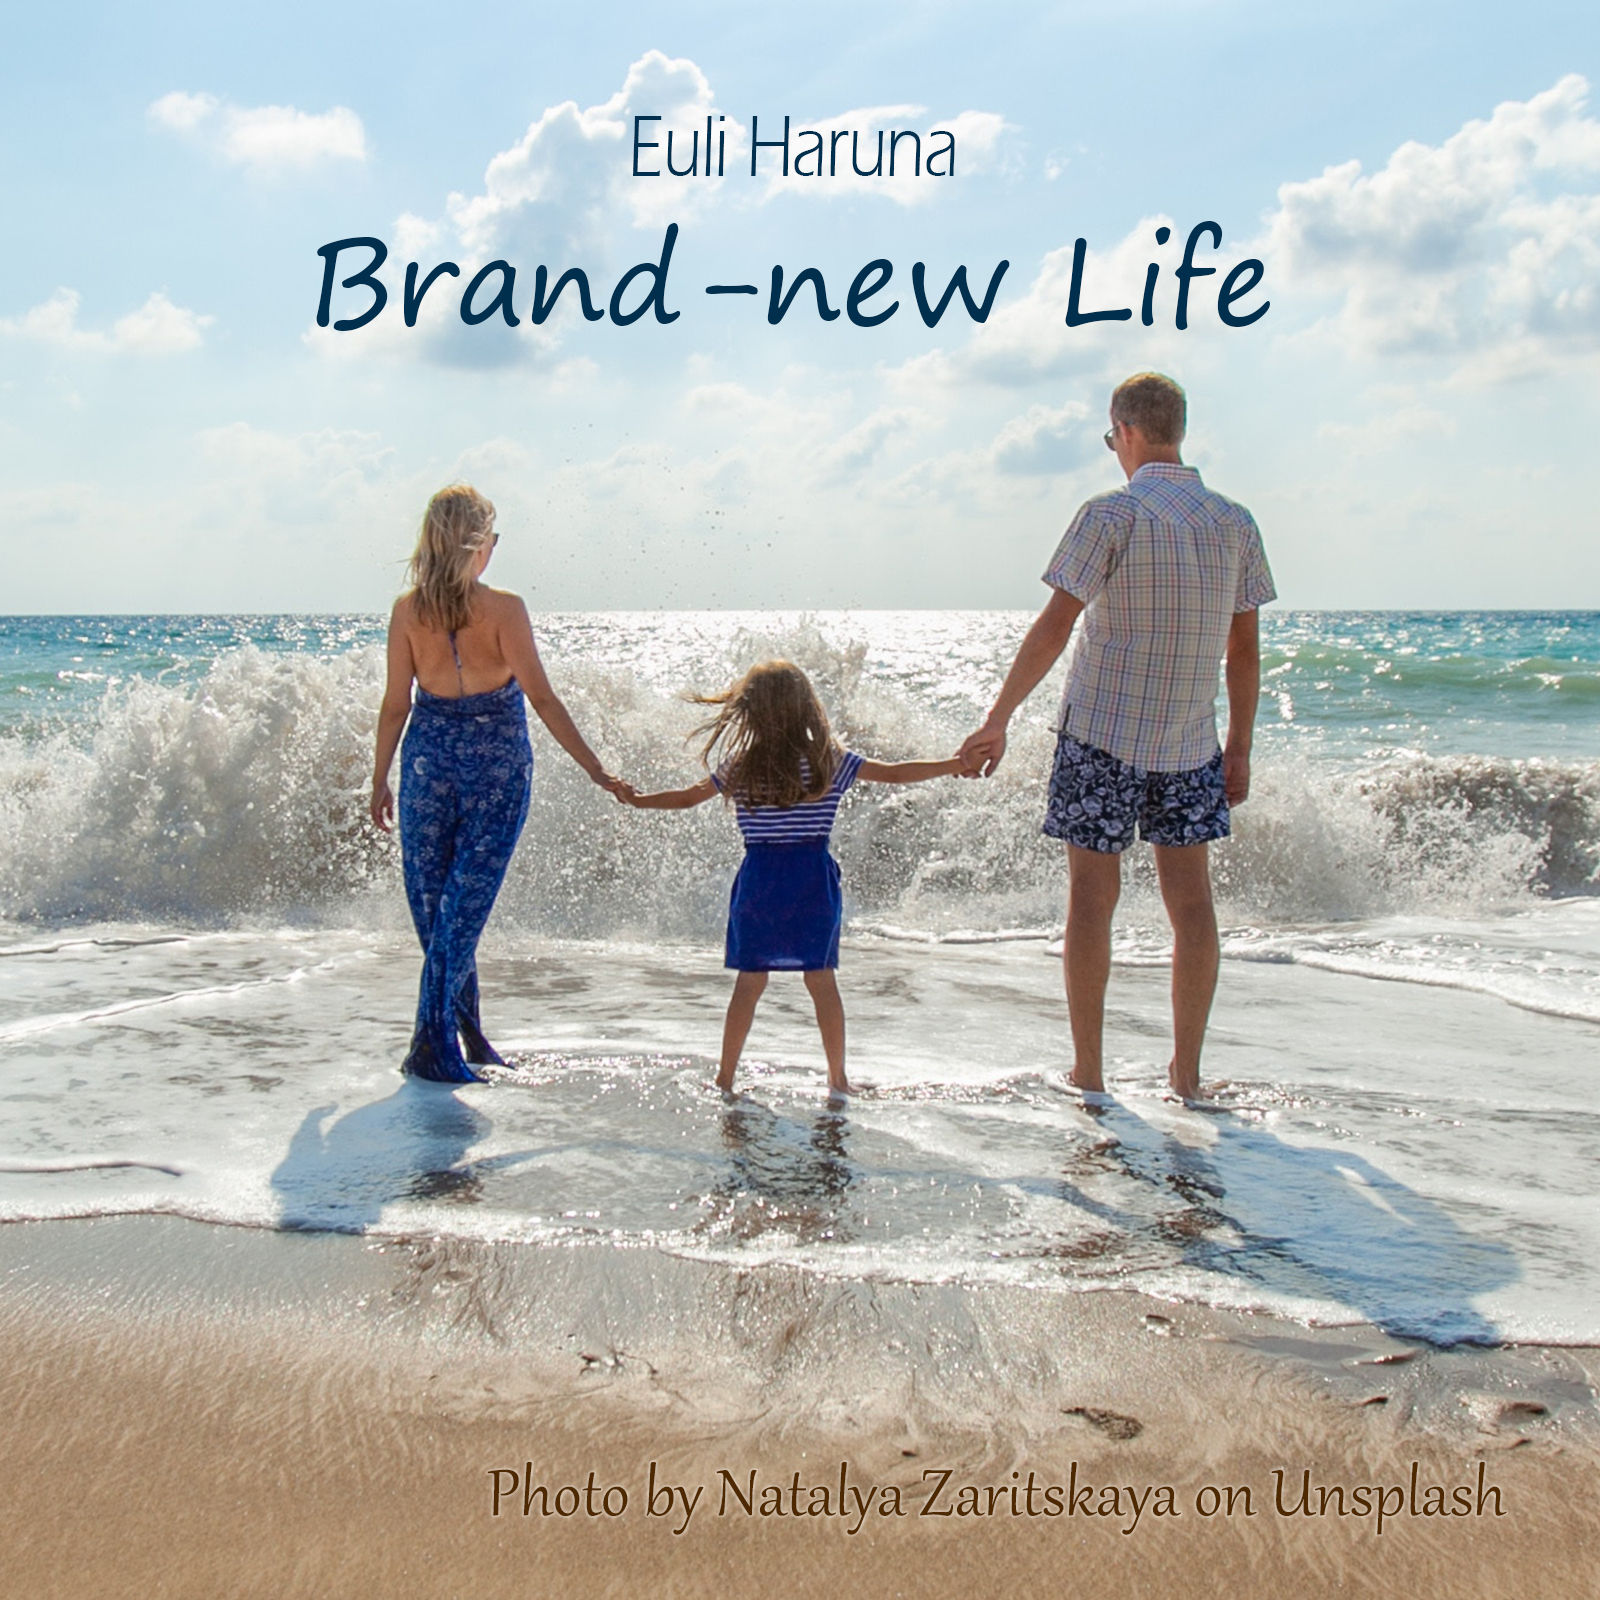 Brand-new Life